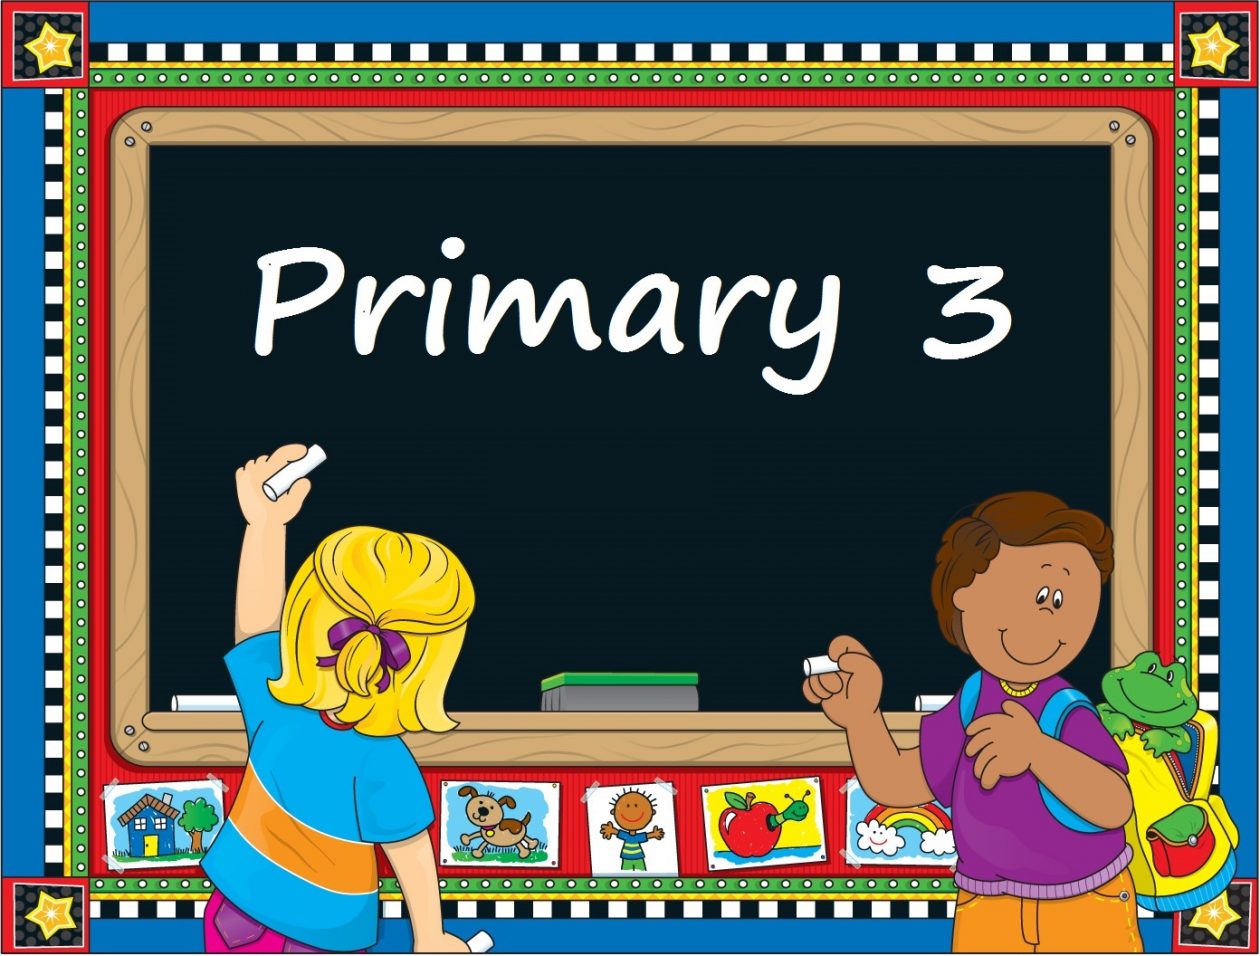 Primary 3 information | St Peter's Primary School